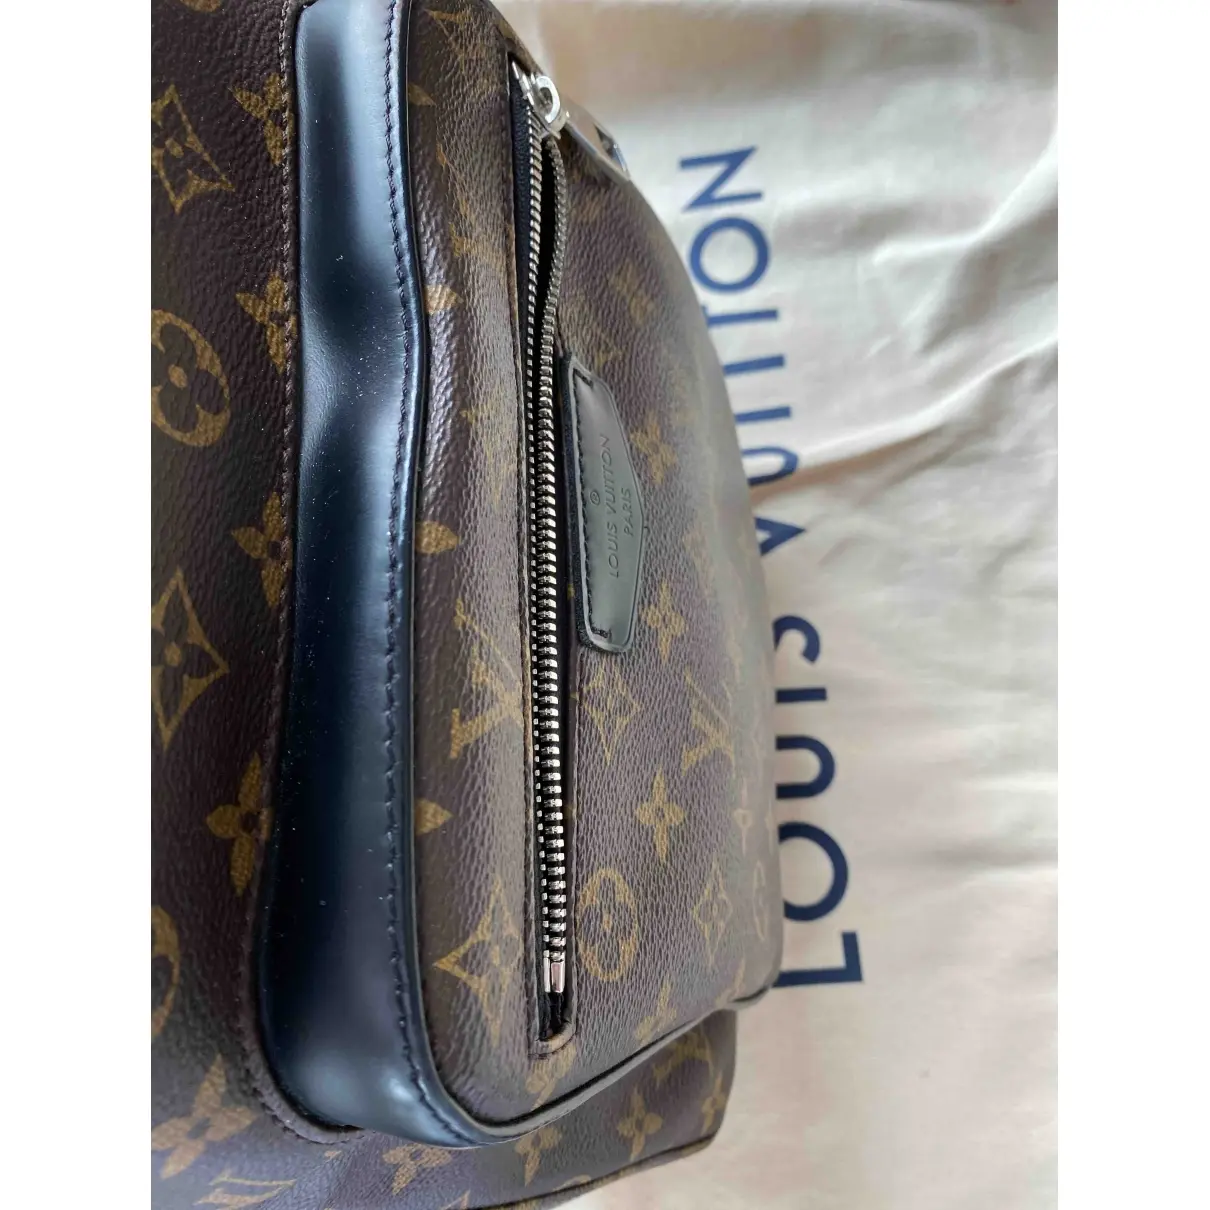 Josh Backpack cloth bag Louis Vuitton